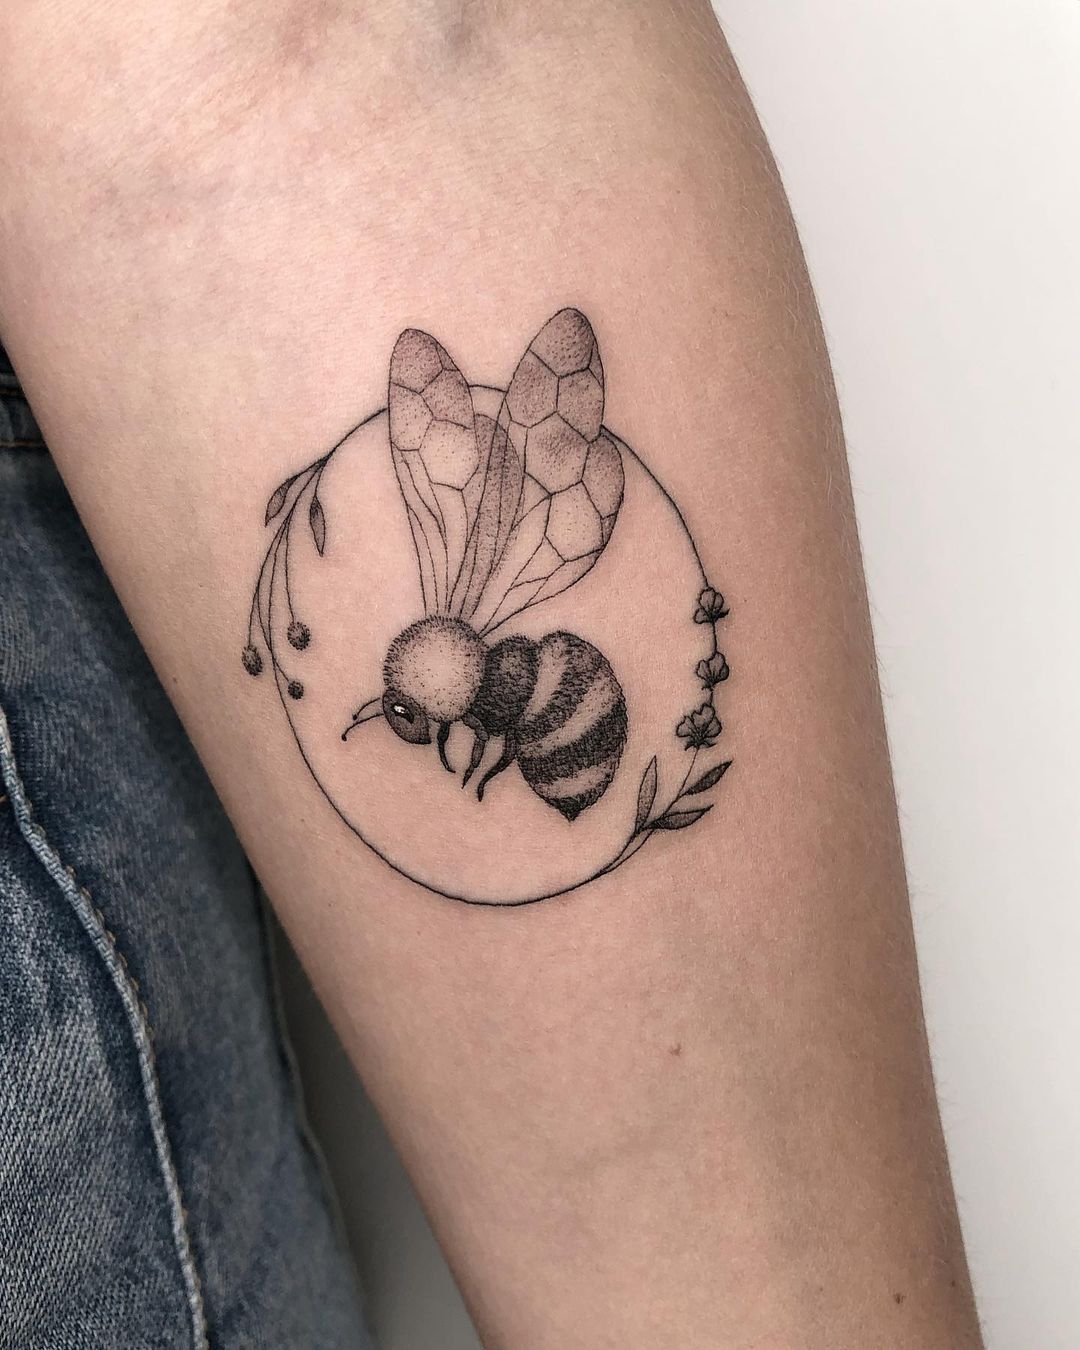 Tatuaje de abeja negra